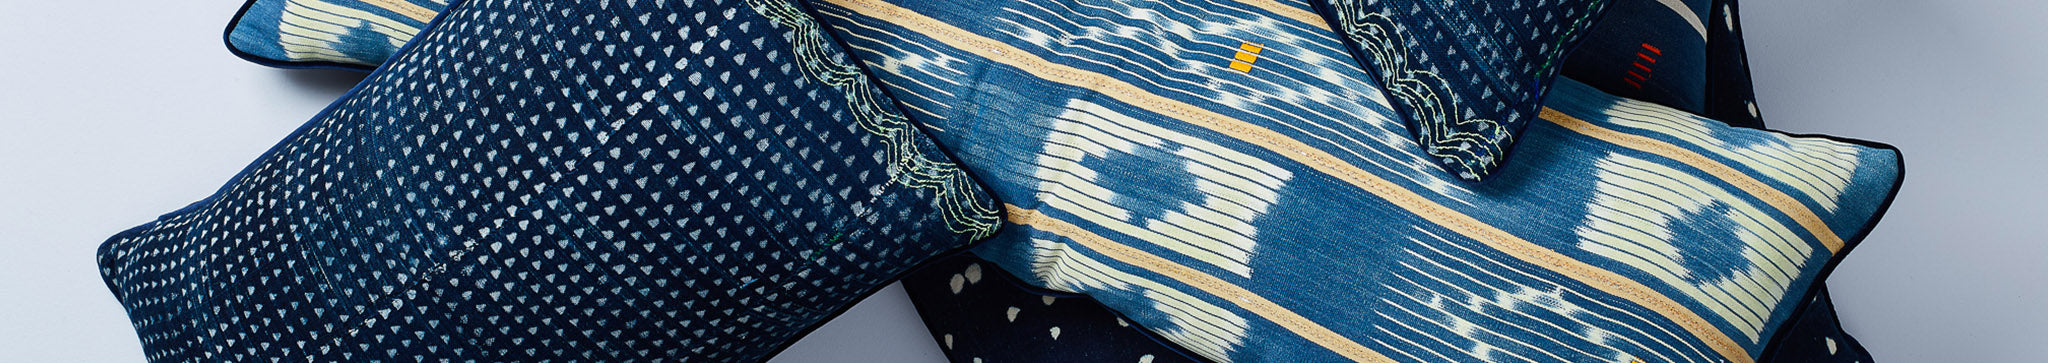 baulé ikat cushions banner nomad design